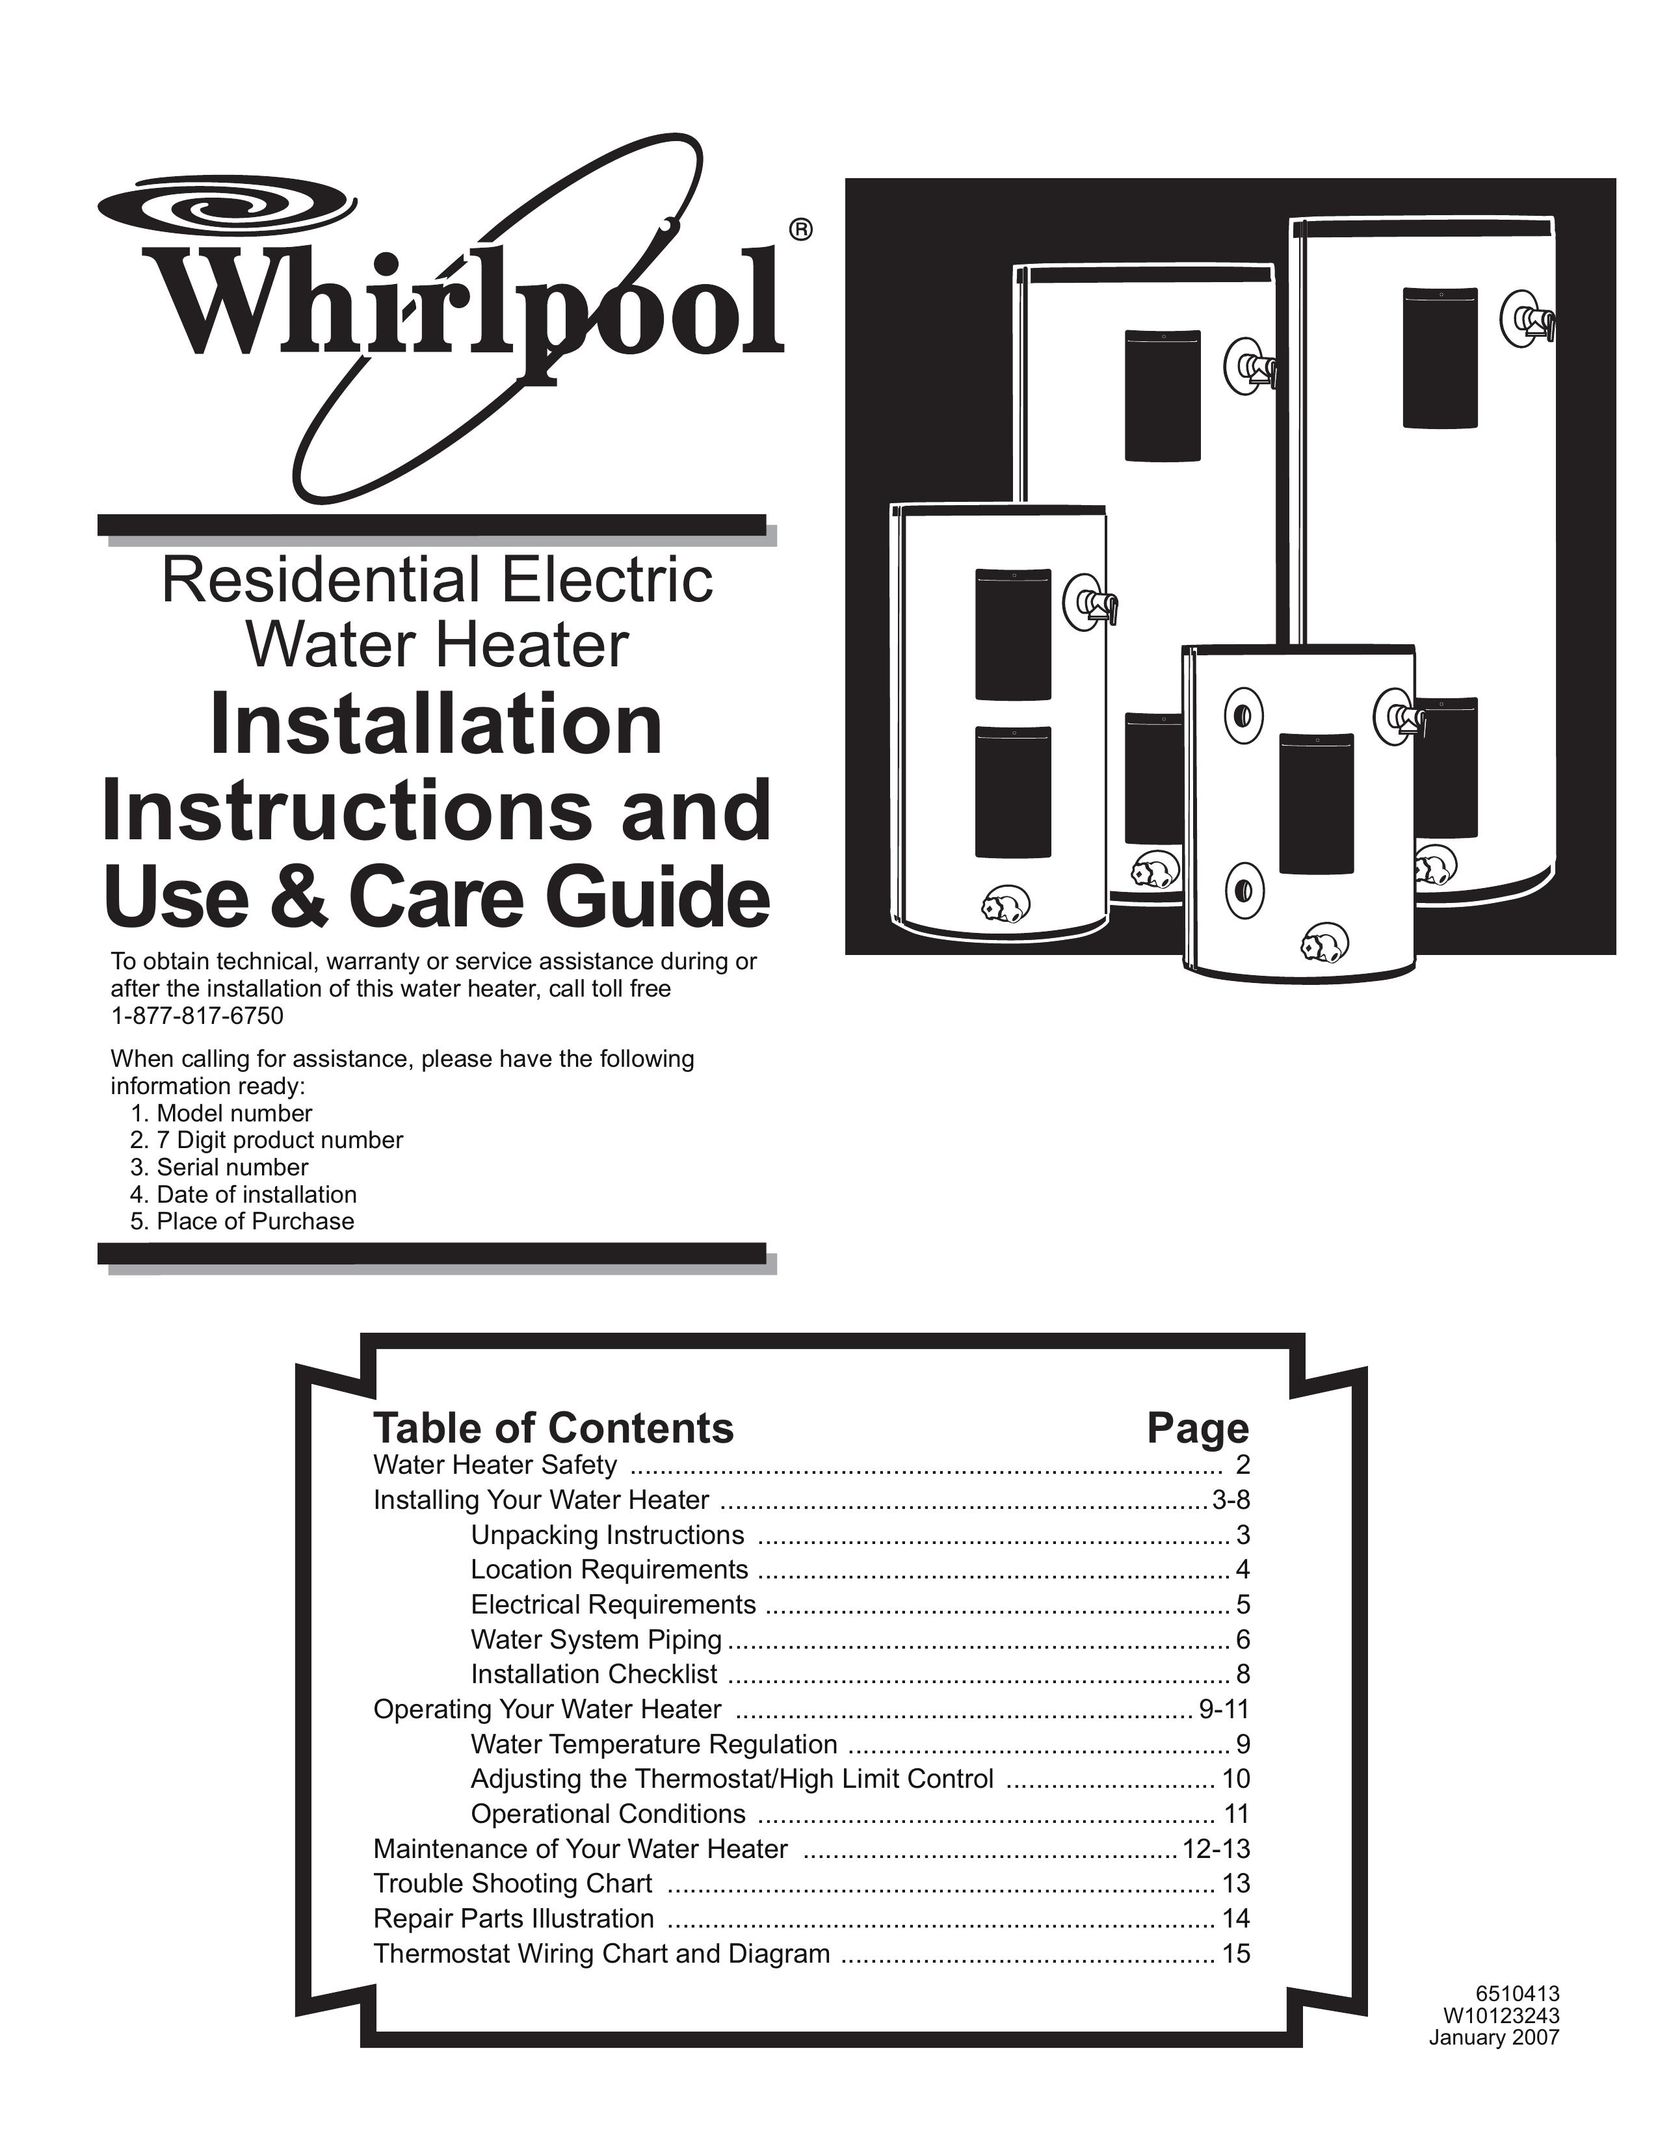 Whirlpool 140449 Water Heater User Manual